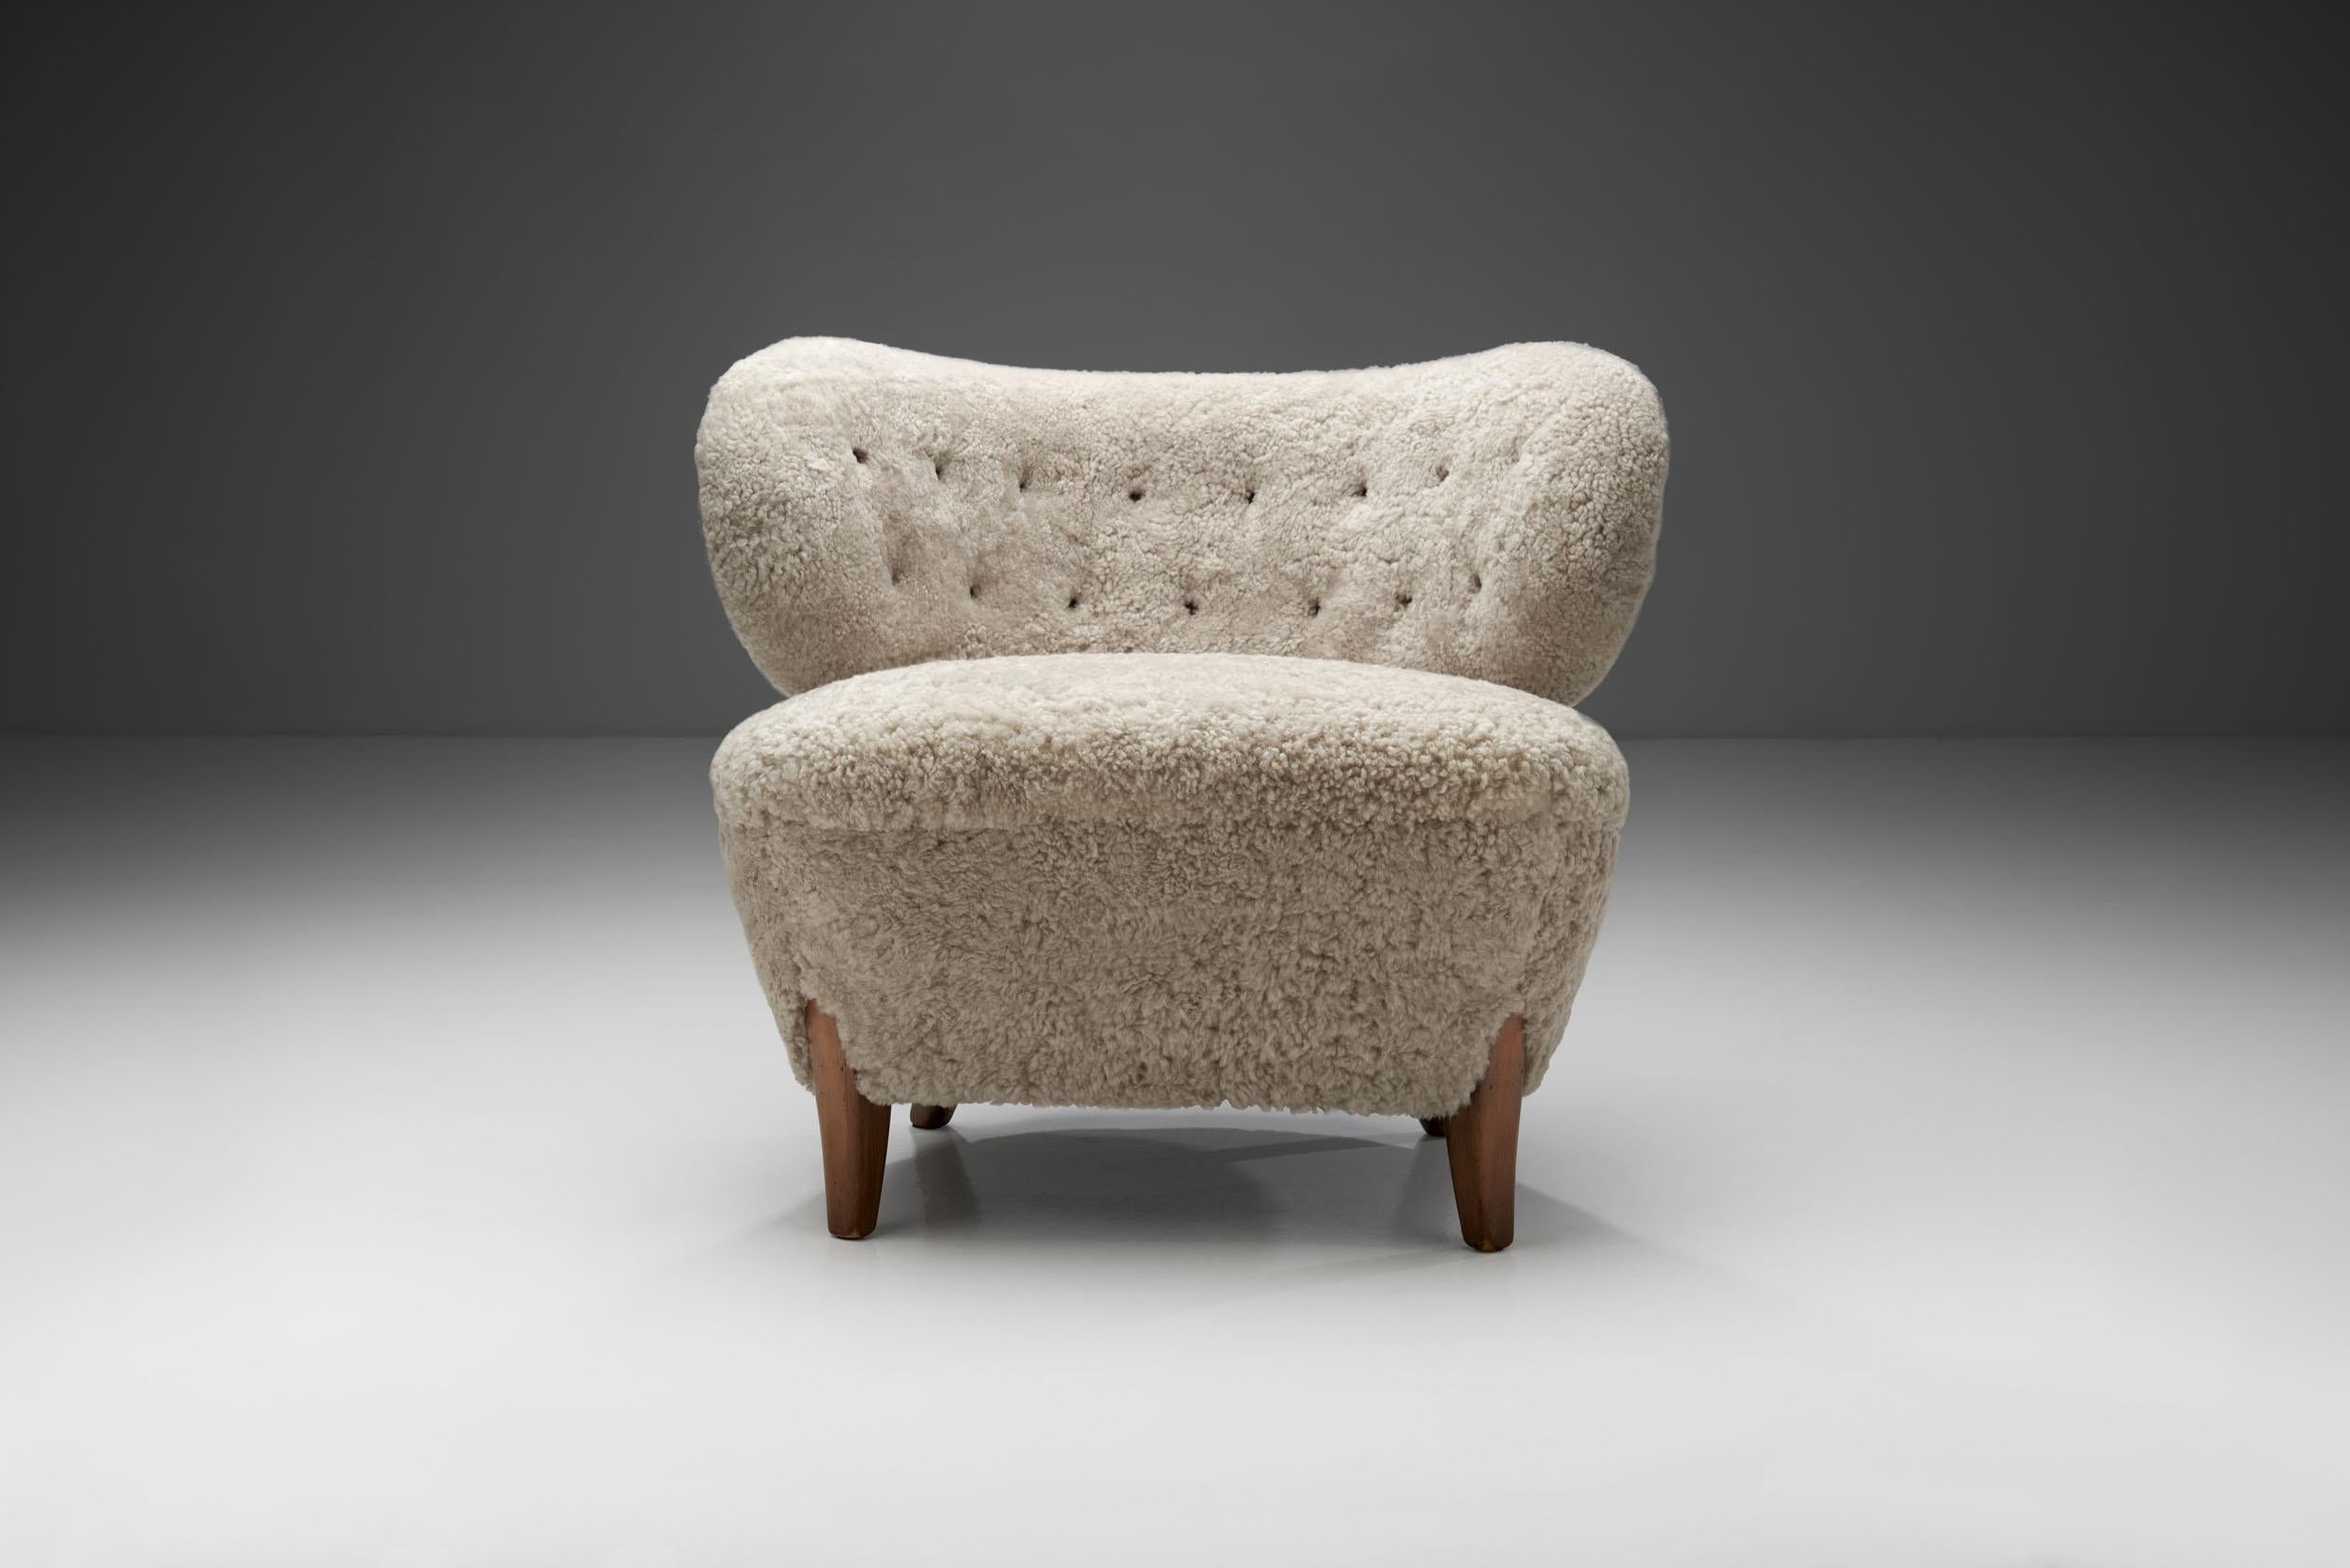 Mid-20th Century “Schulz” Lounge Chair by Otto Schulz for Jio Möbler Jönköping, Sweden circa 1940